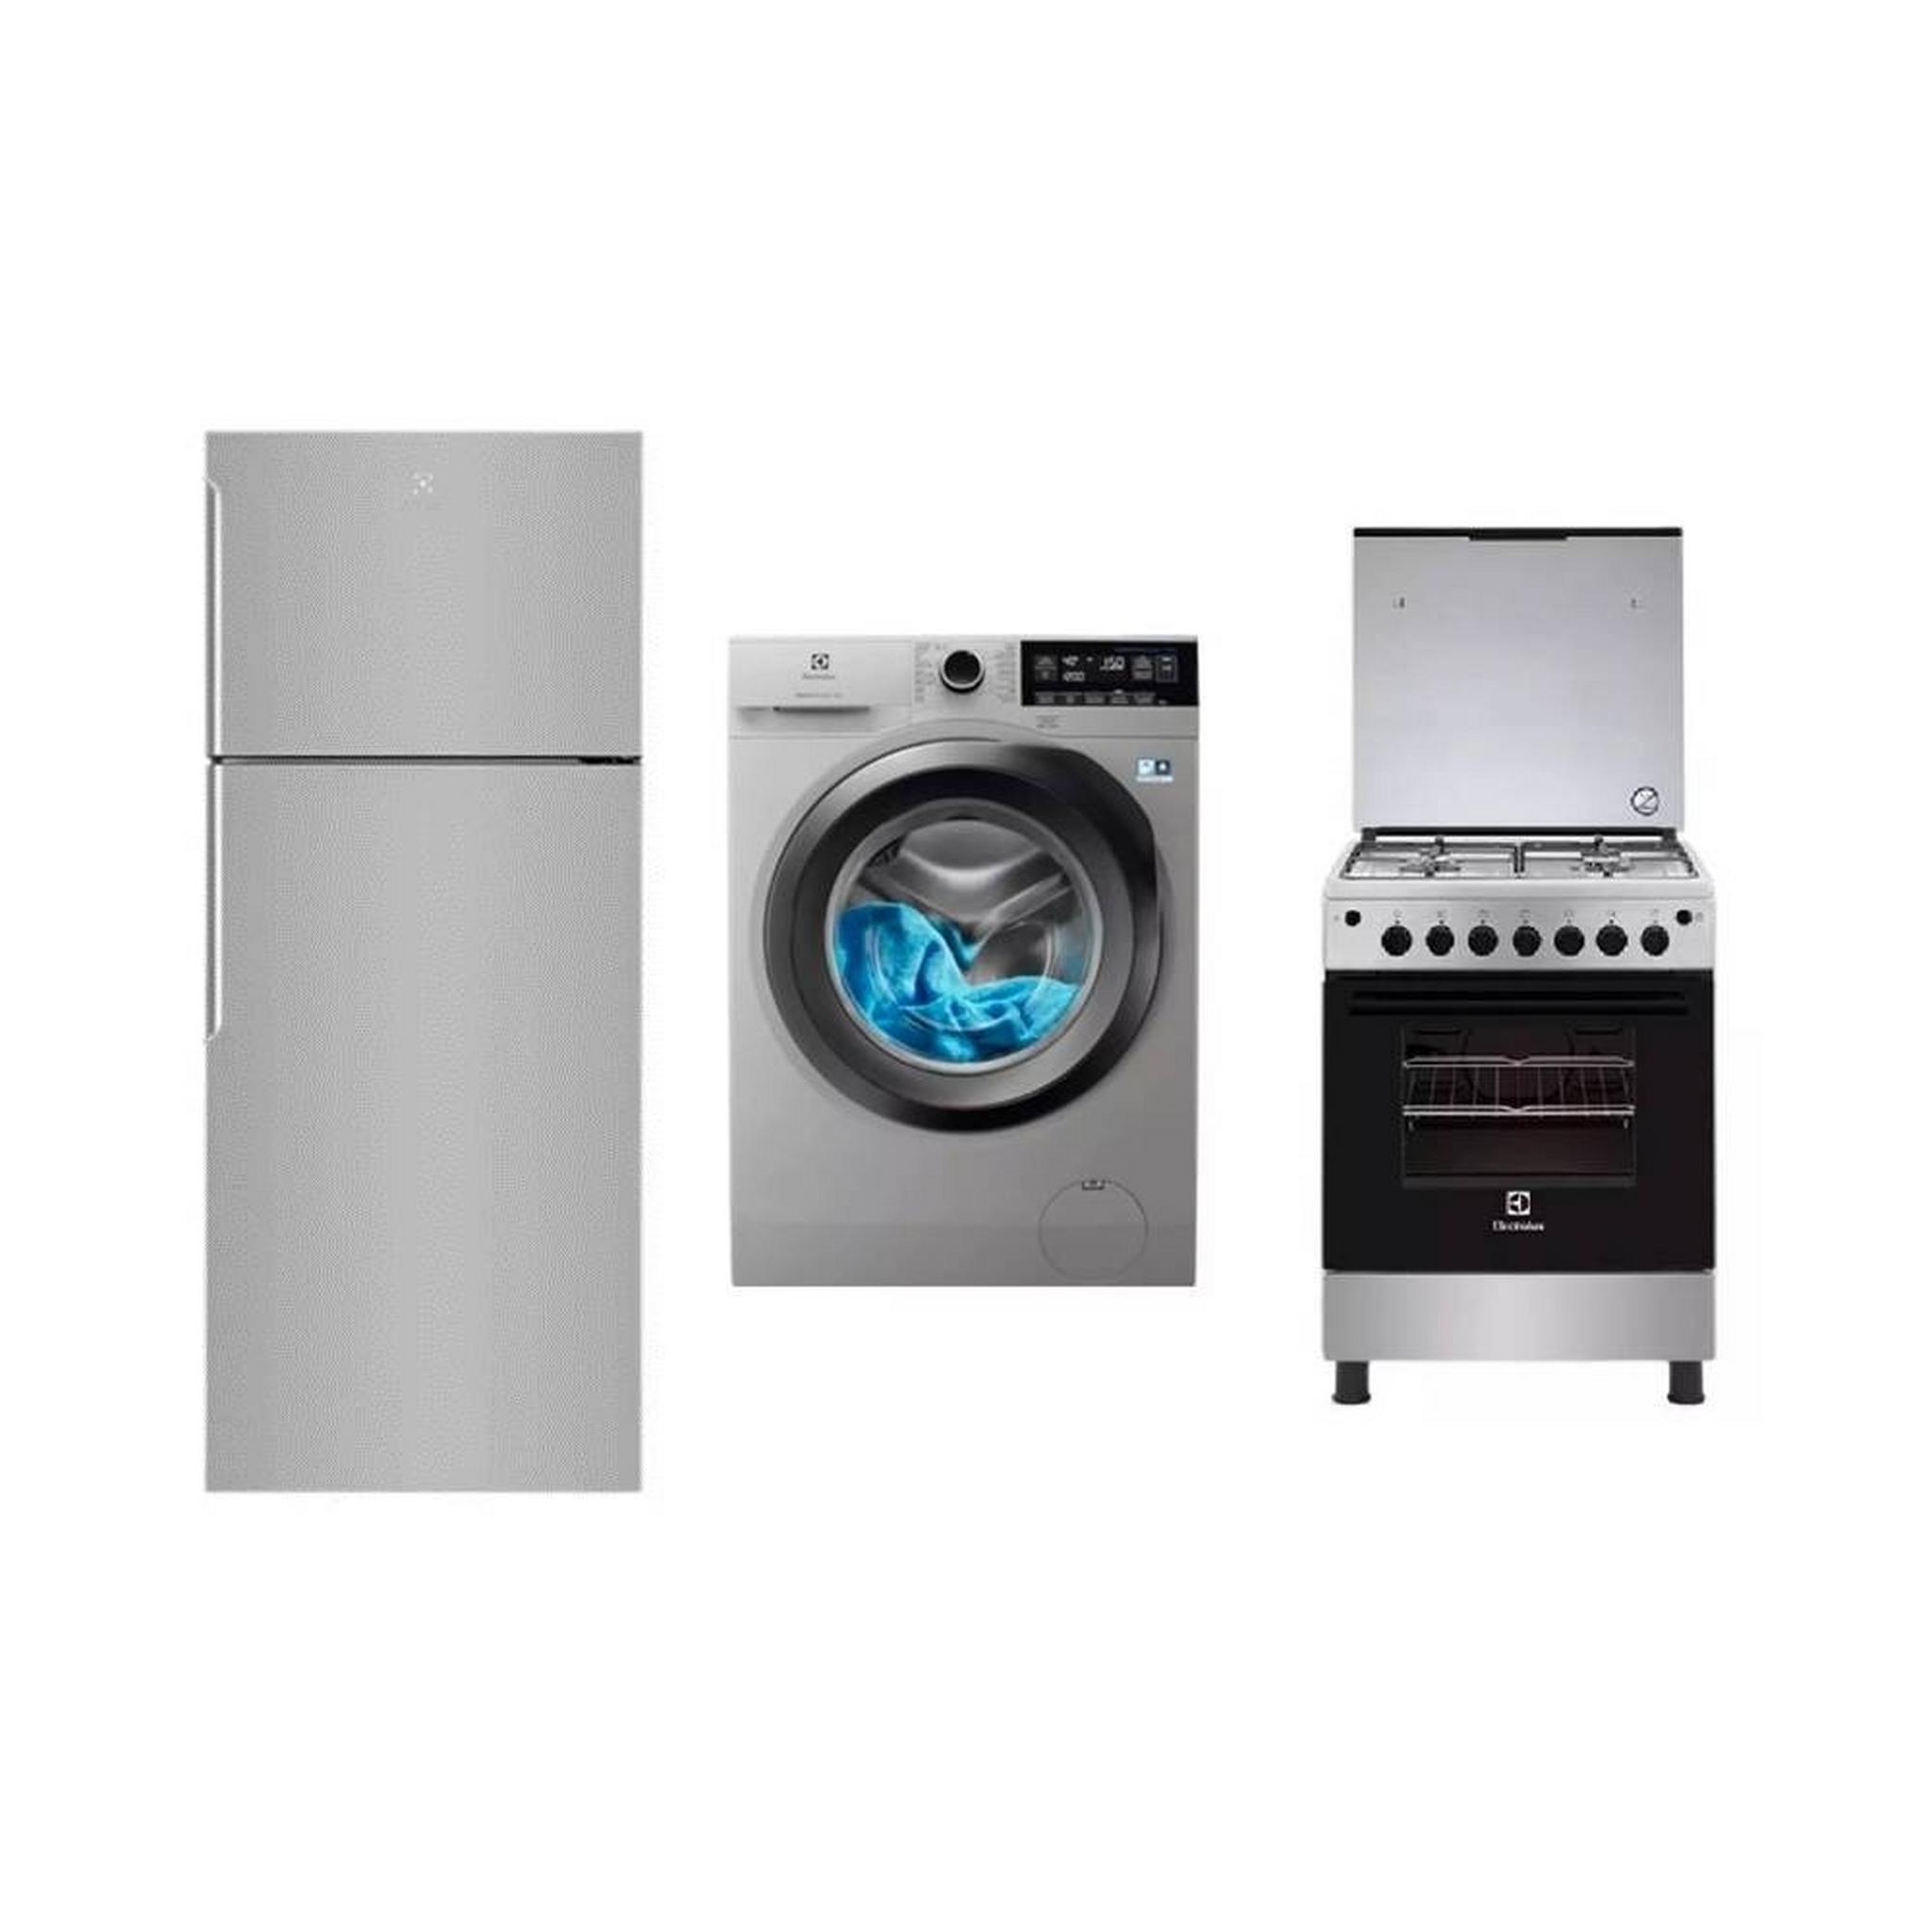 ELECTROLUX Refrigerator Top Freezer, 16 CFT, Stainless steel + Cooker Gas, 68 Liters, Silver + 9 KG Front Load Washer, Silver Bundle, EMT85+EW7F+EKG611